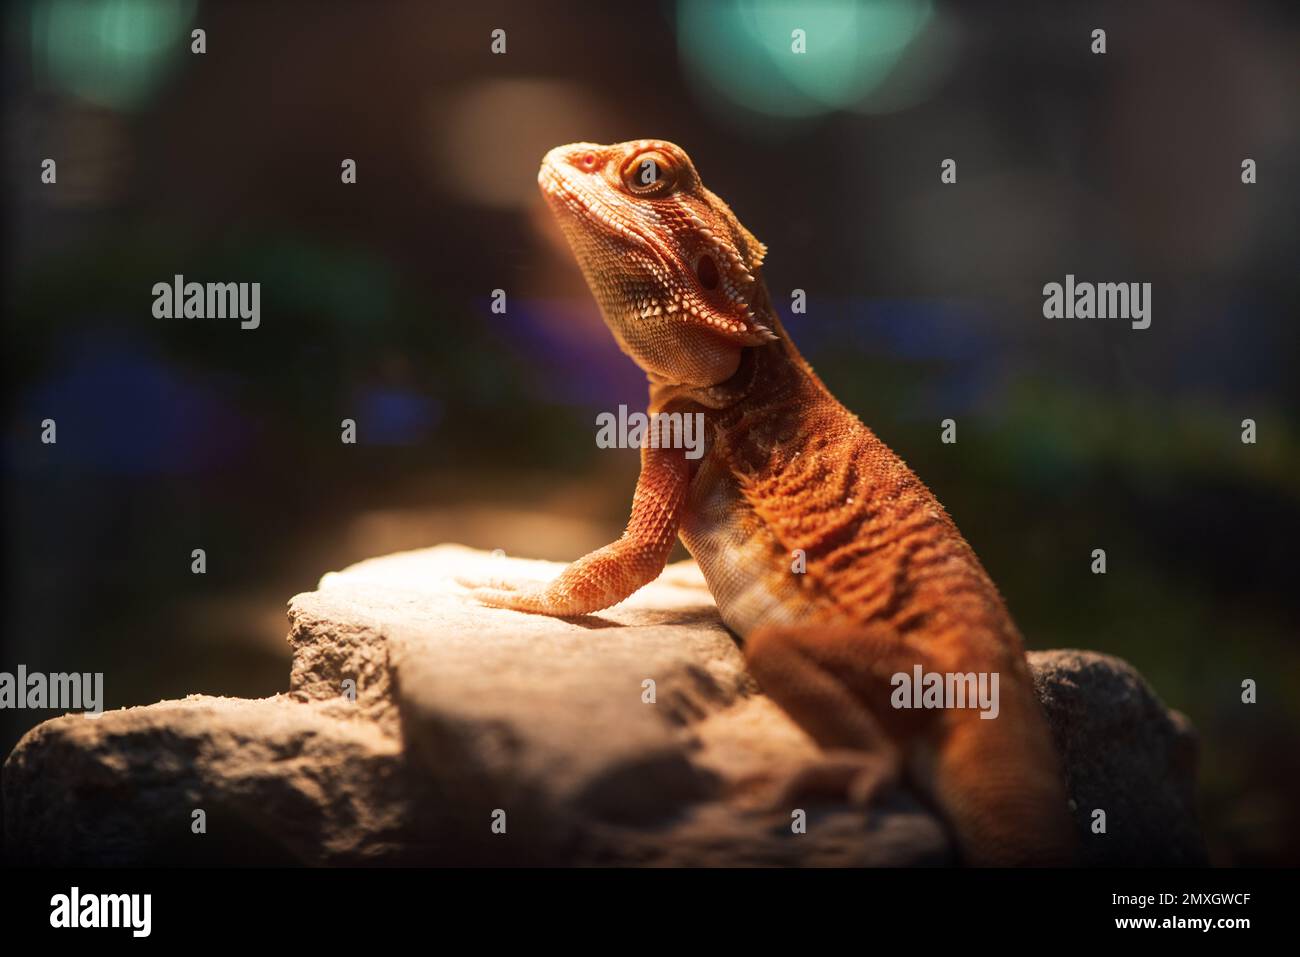 Lizard in a terrarium with beautiful lighting Stock Photo